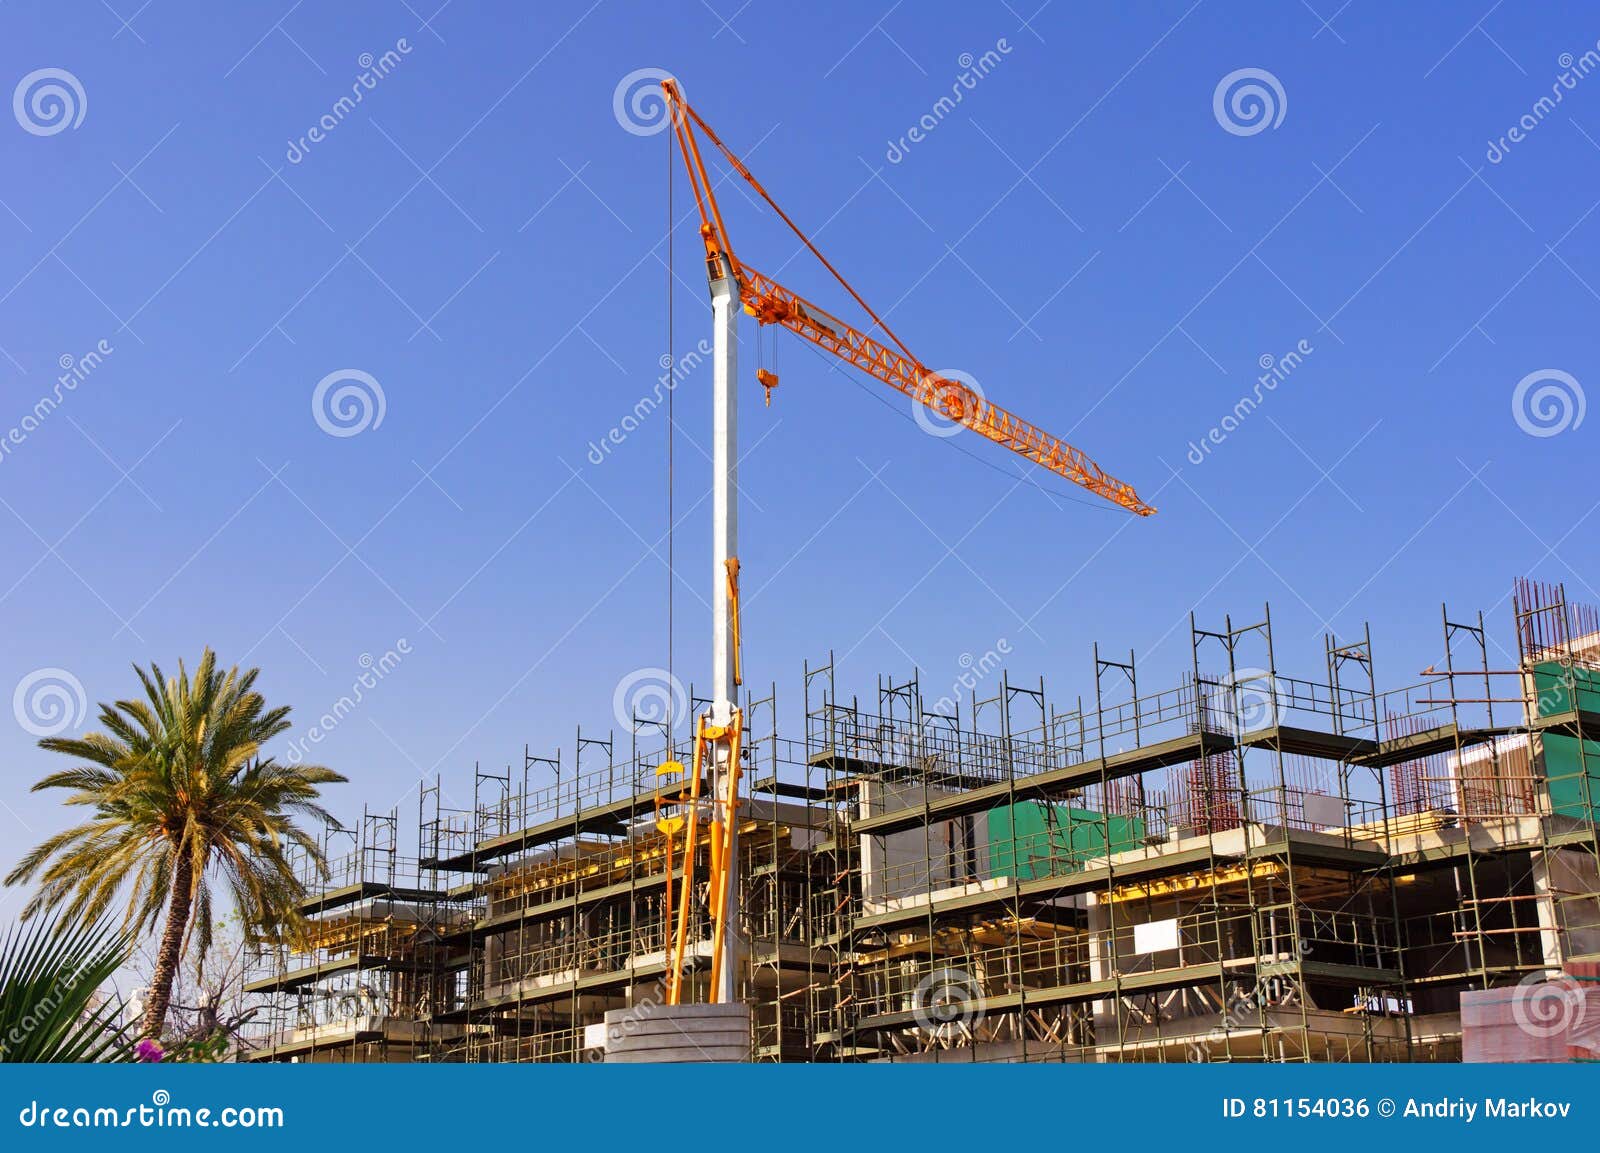 big yellow hoisting crane